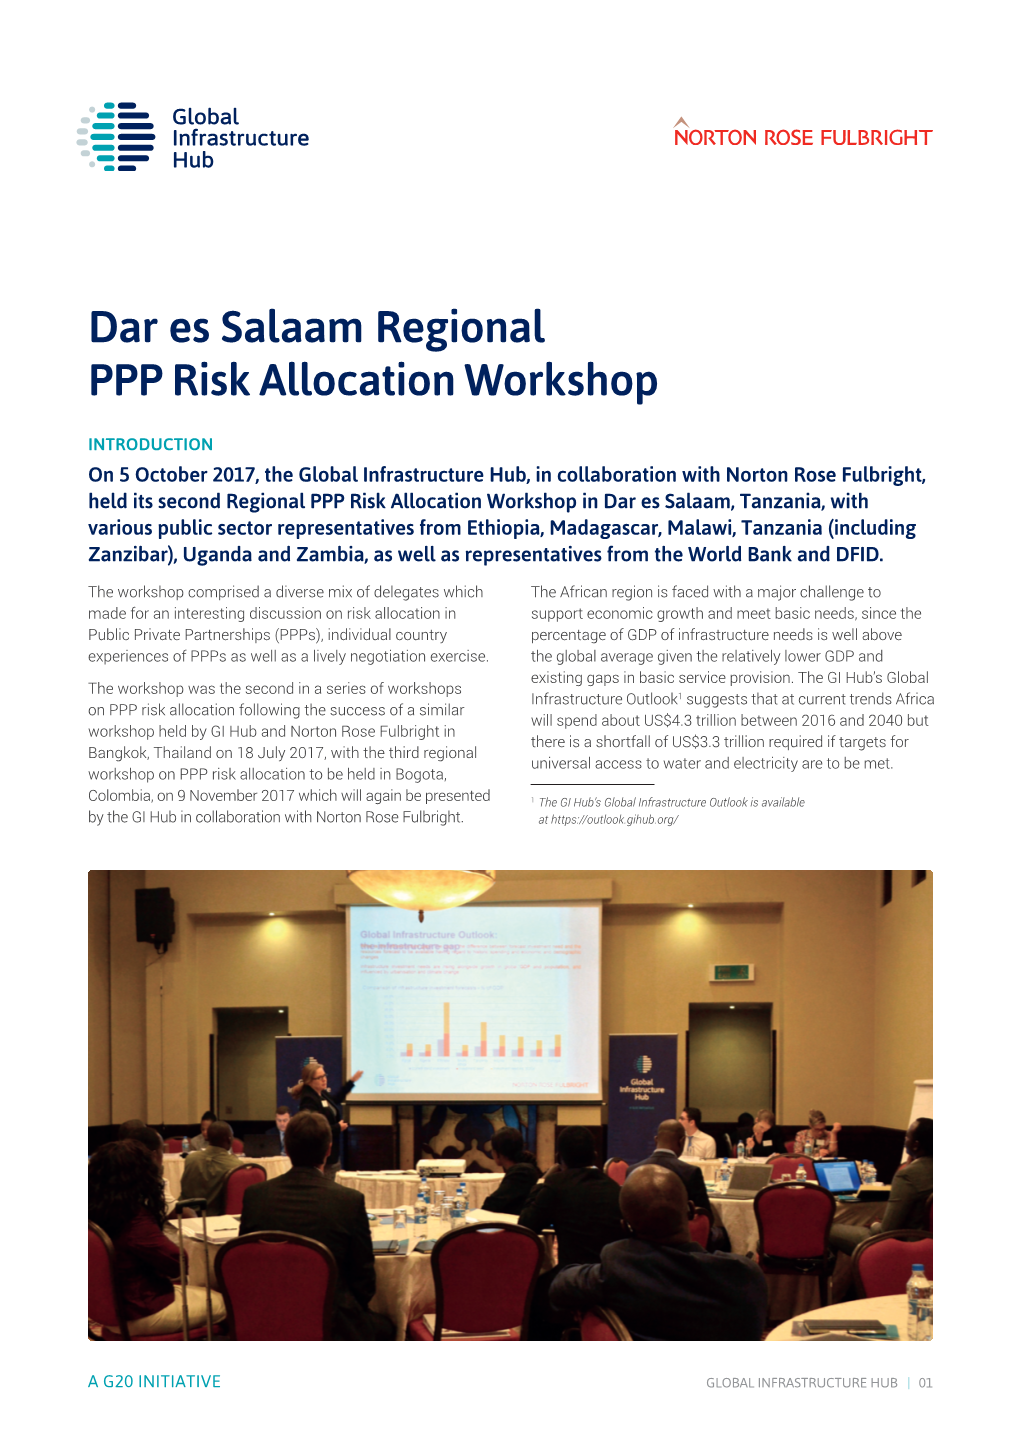 Dar Es Salaam Regional PPP Risk Allocation Workshop